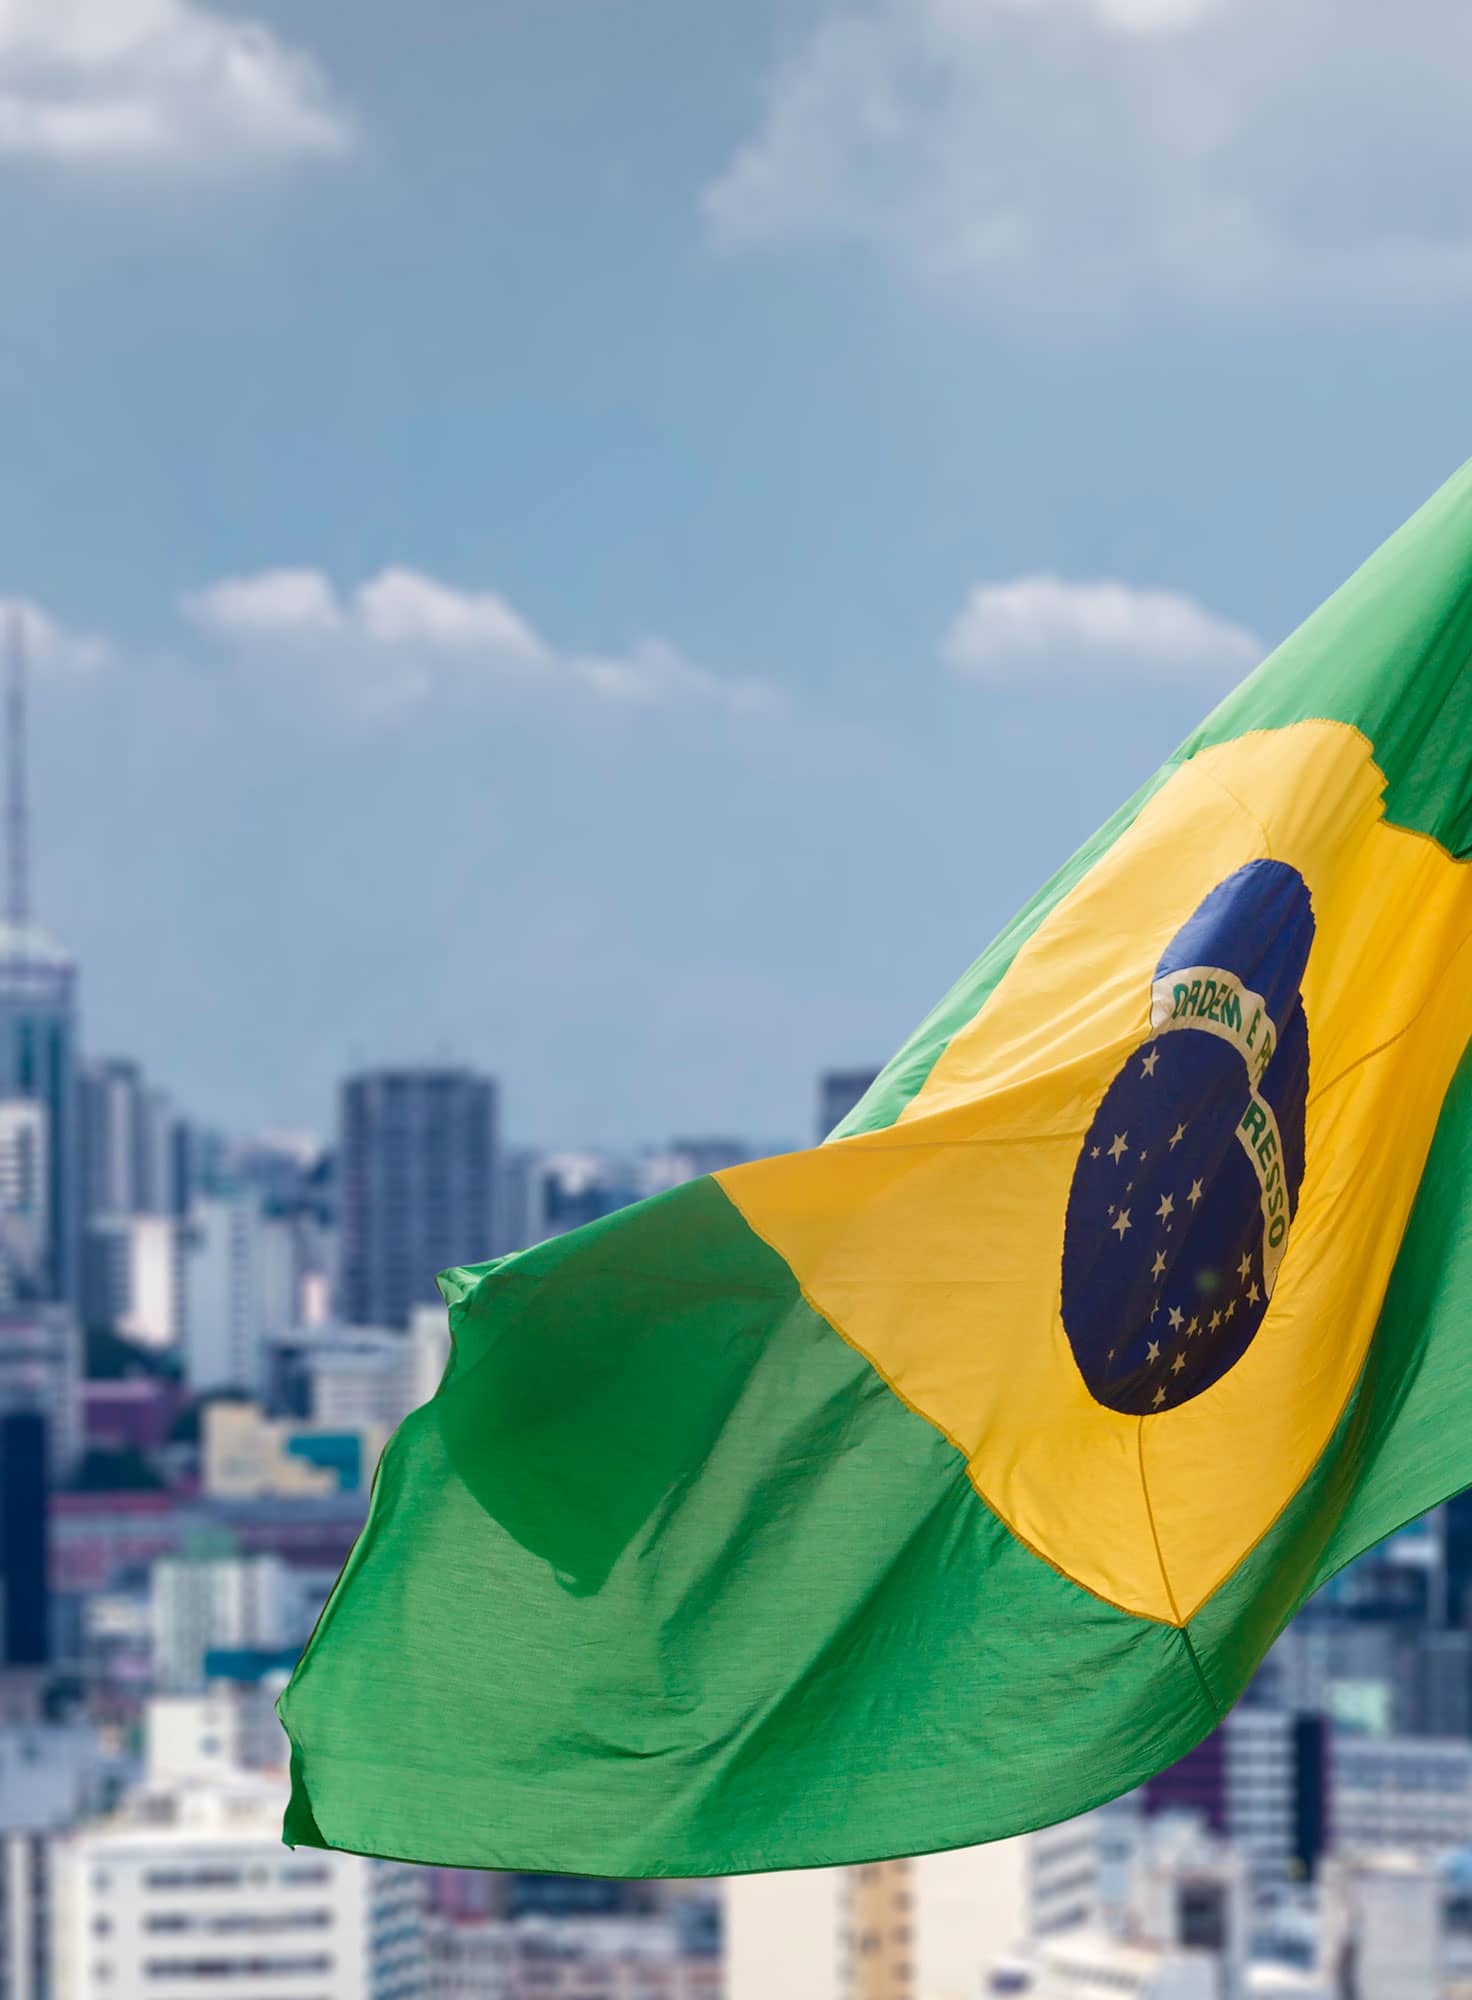 Brasilien-Flagge und im Hintergrund die Stadt Sao Paulo / Brazil flag and the city of Sao Paulo in the background.